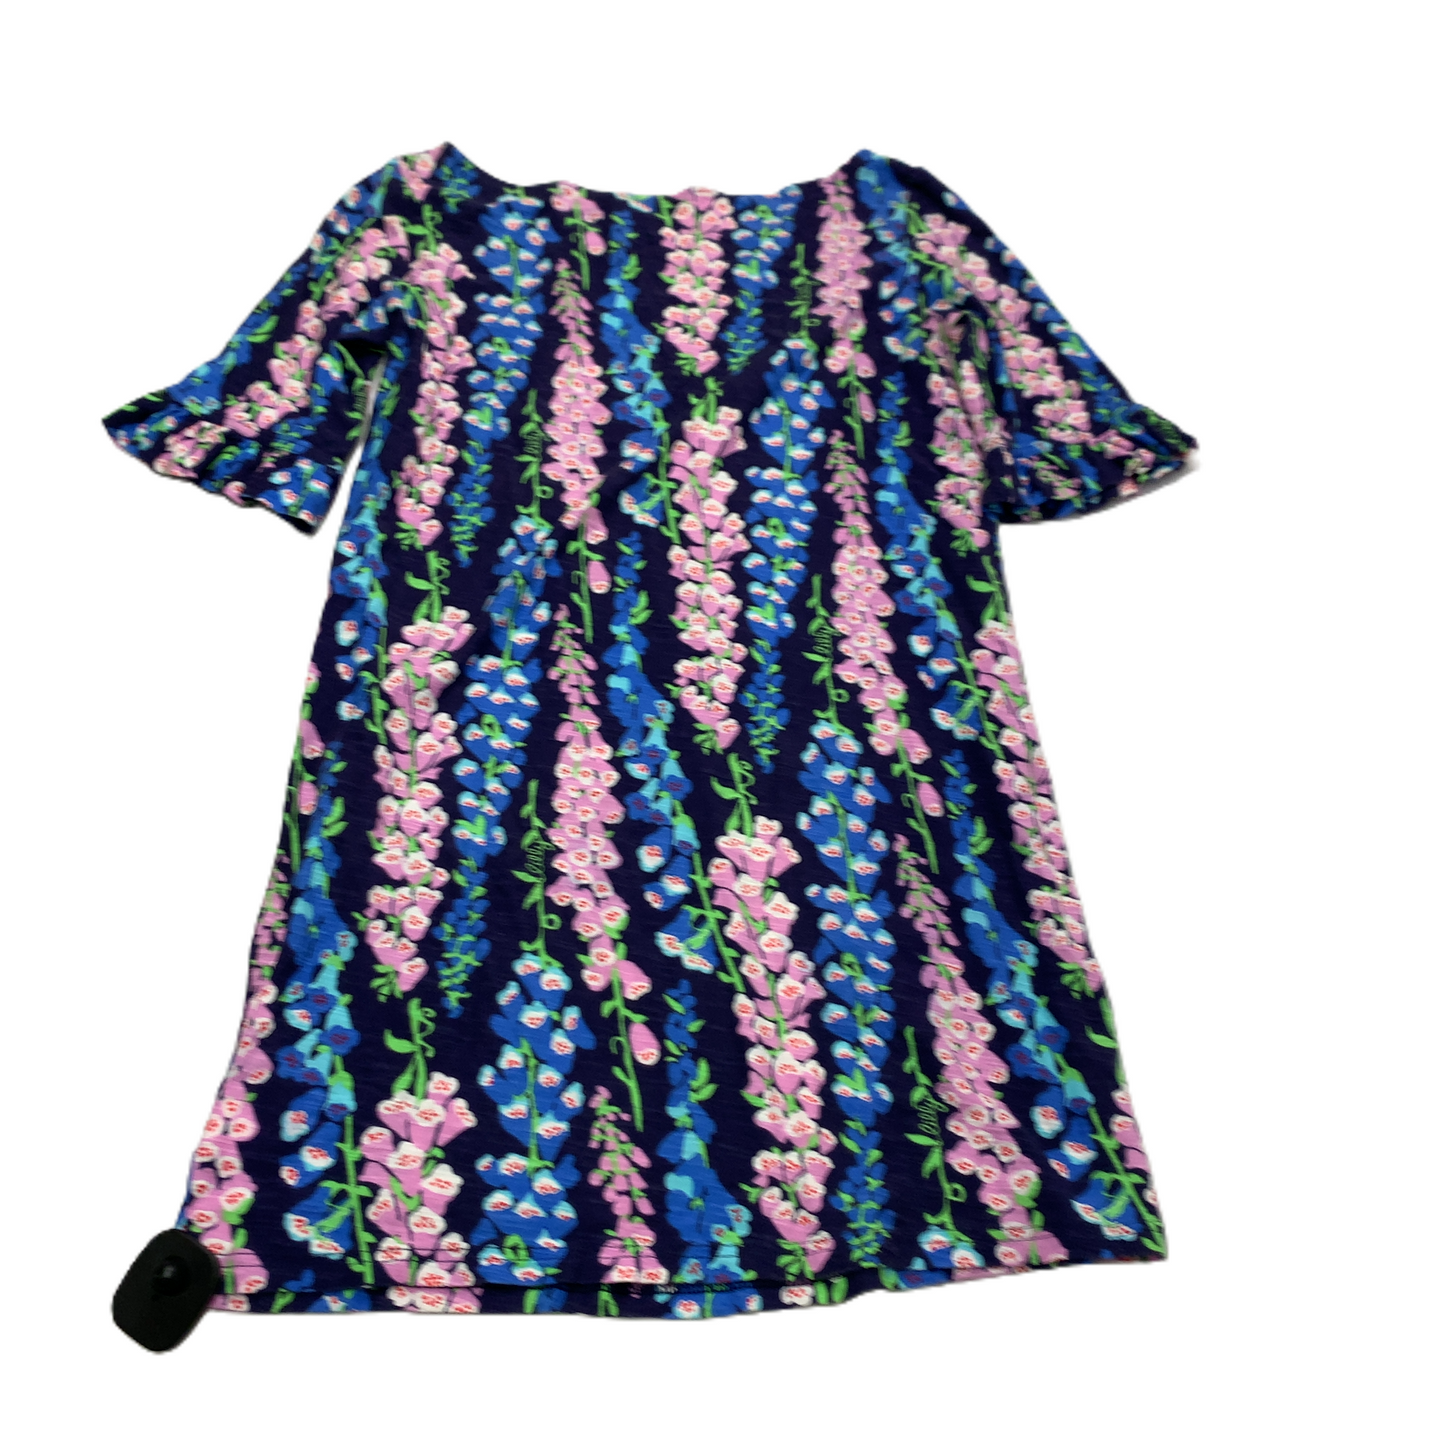 Blue & Purple  Dress Designer By Lilly Pulitzer  Size: M